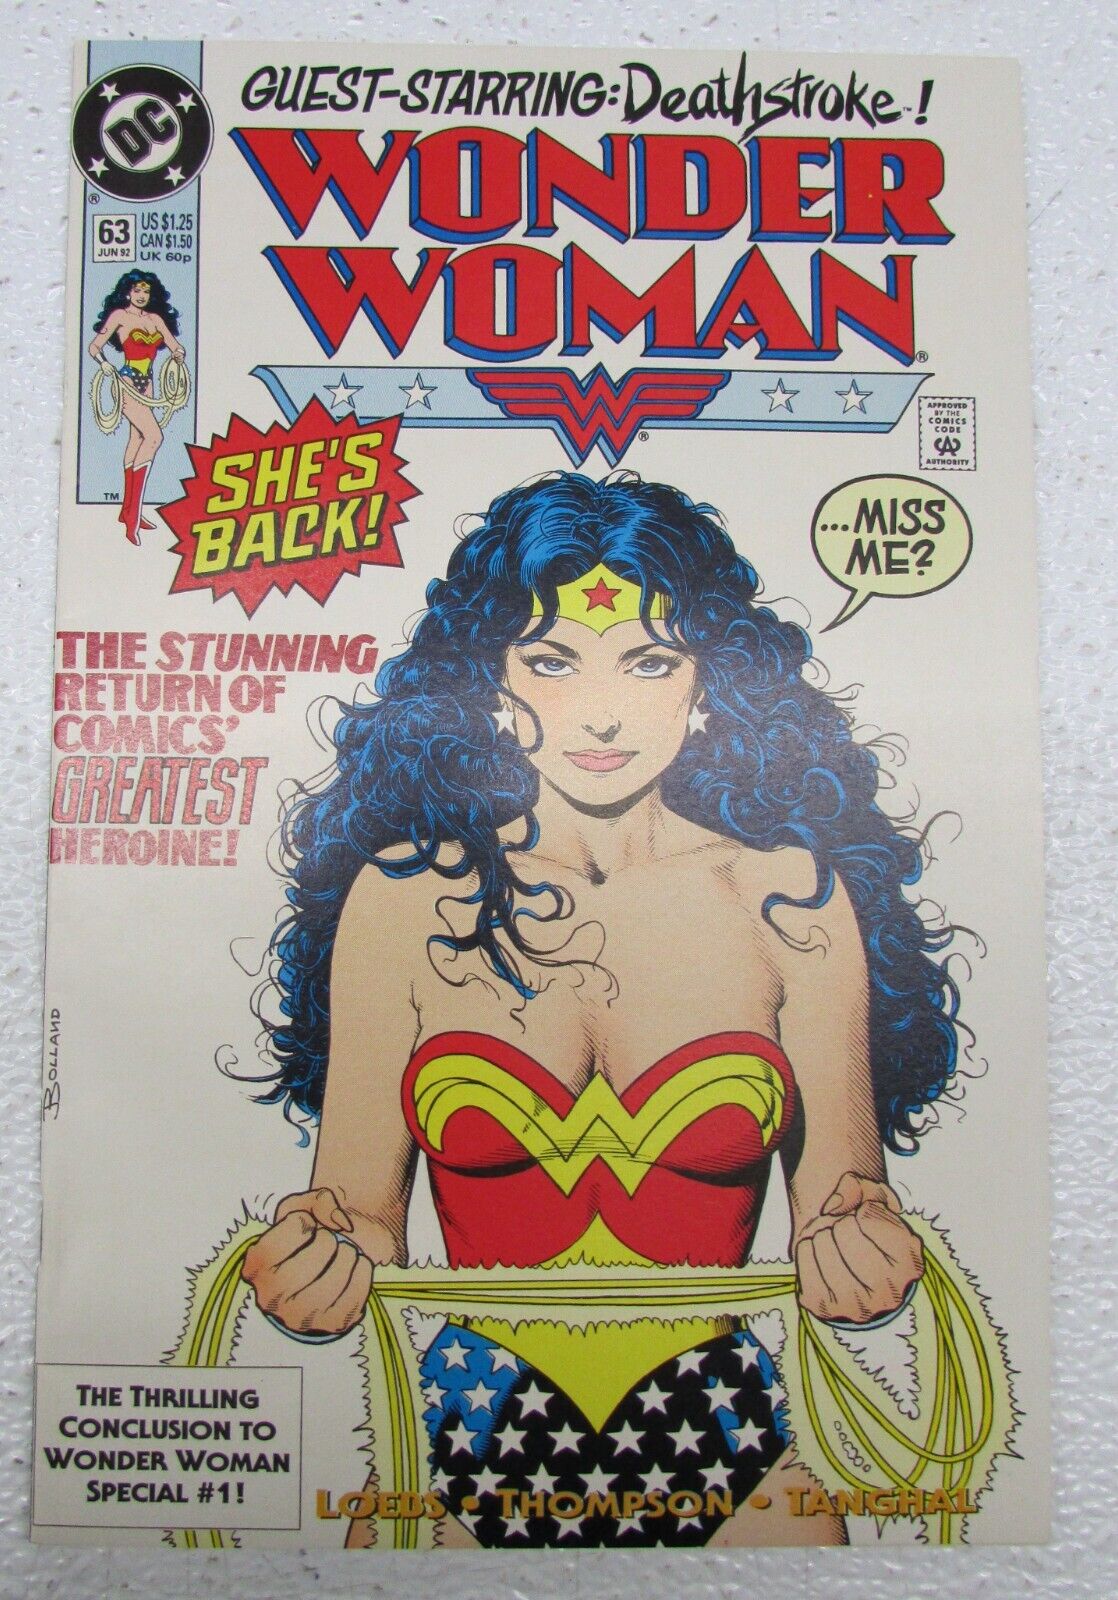 DC COMIC BOOK WONDER WOMAN GUEST STARRING DEATHSTROKE #63 JUN 1992